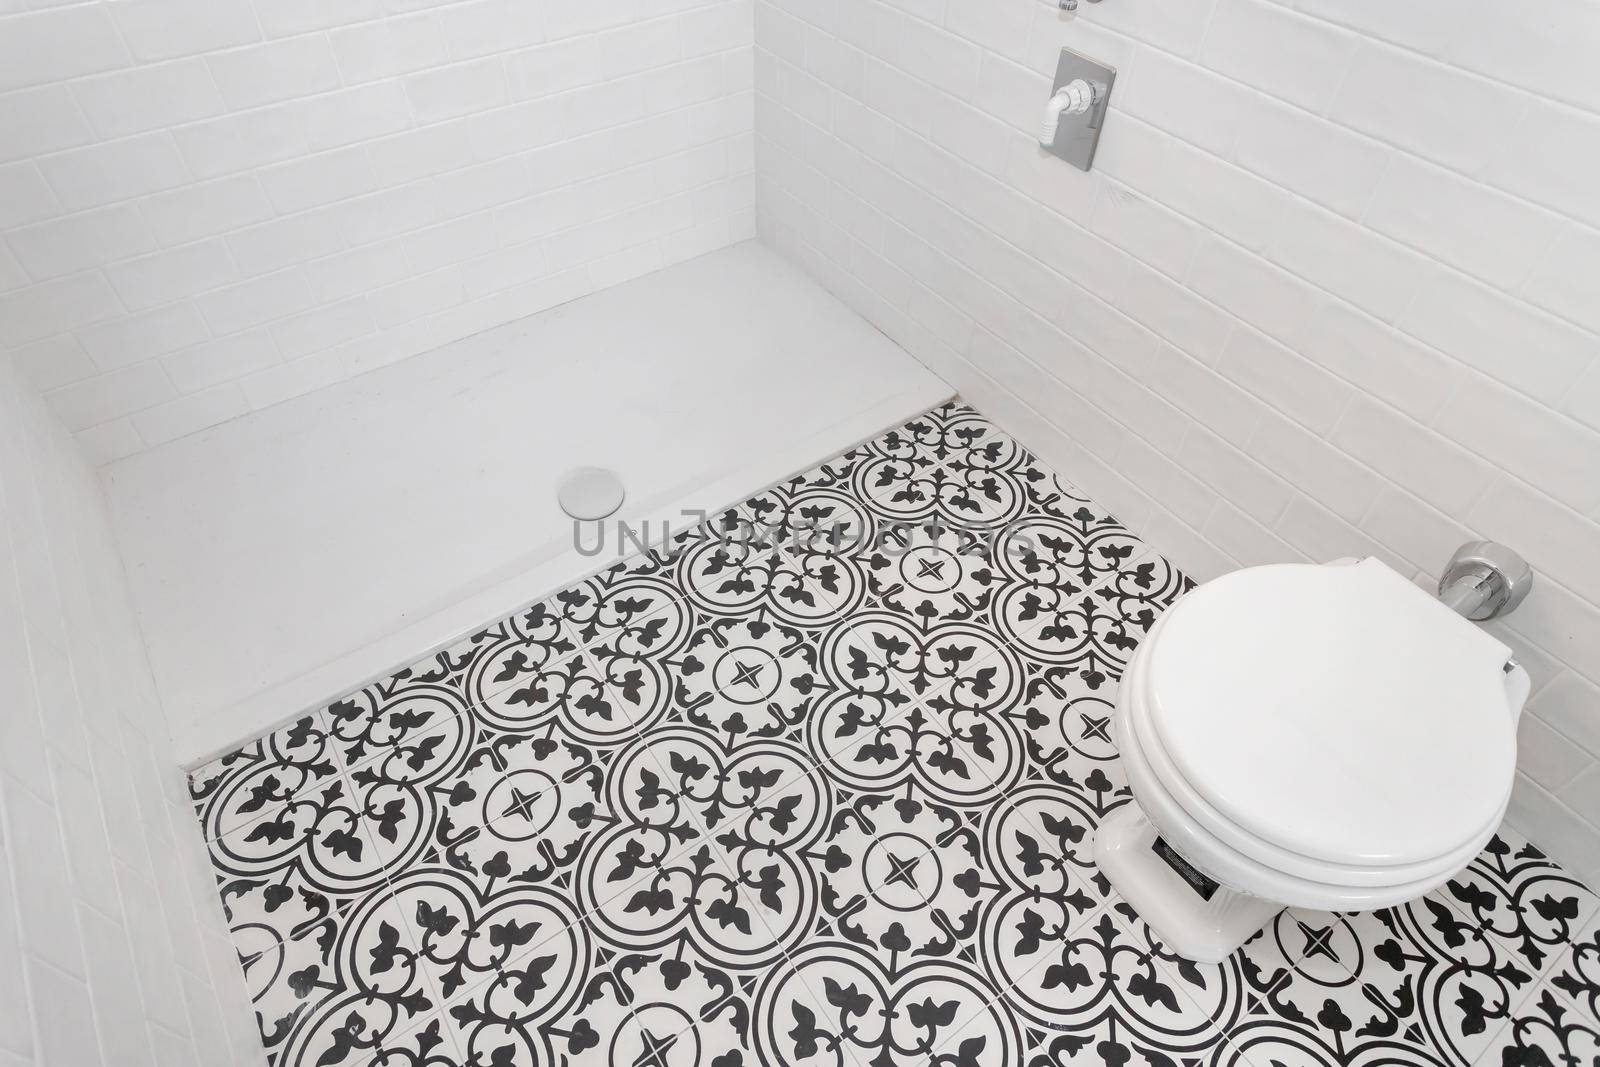 White ceramic toilet at luxury bathroom, with decored floor tiles. Italian style.